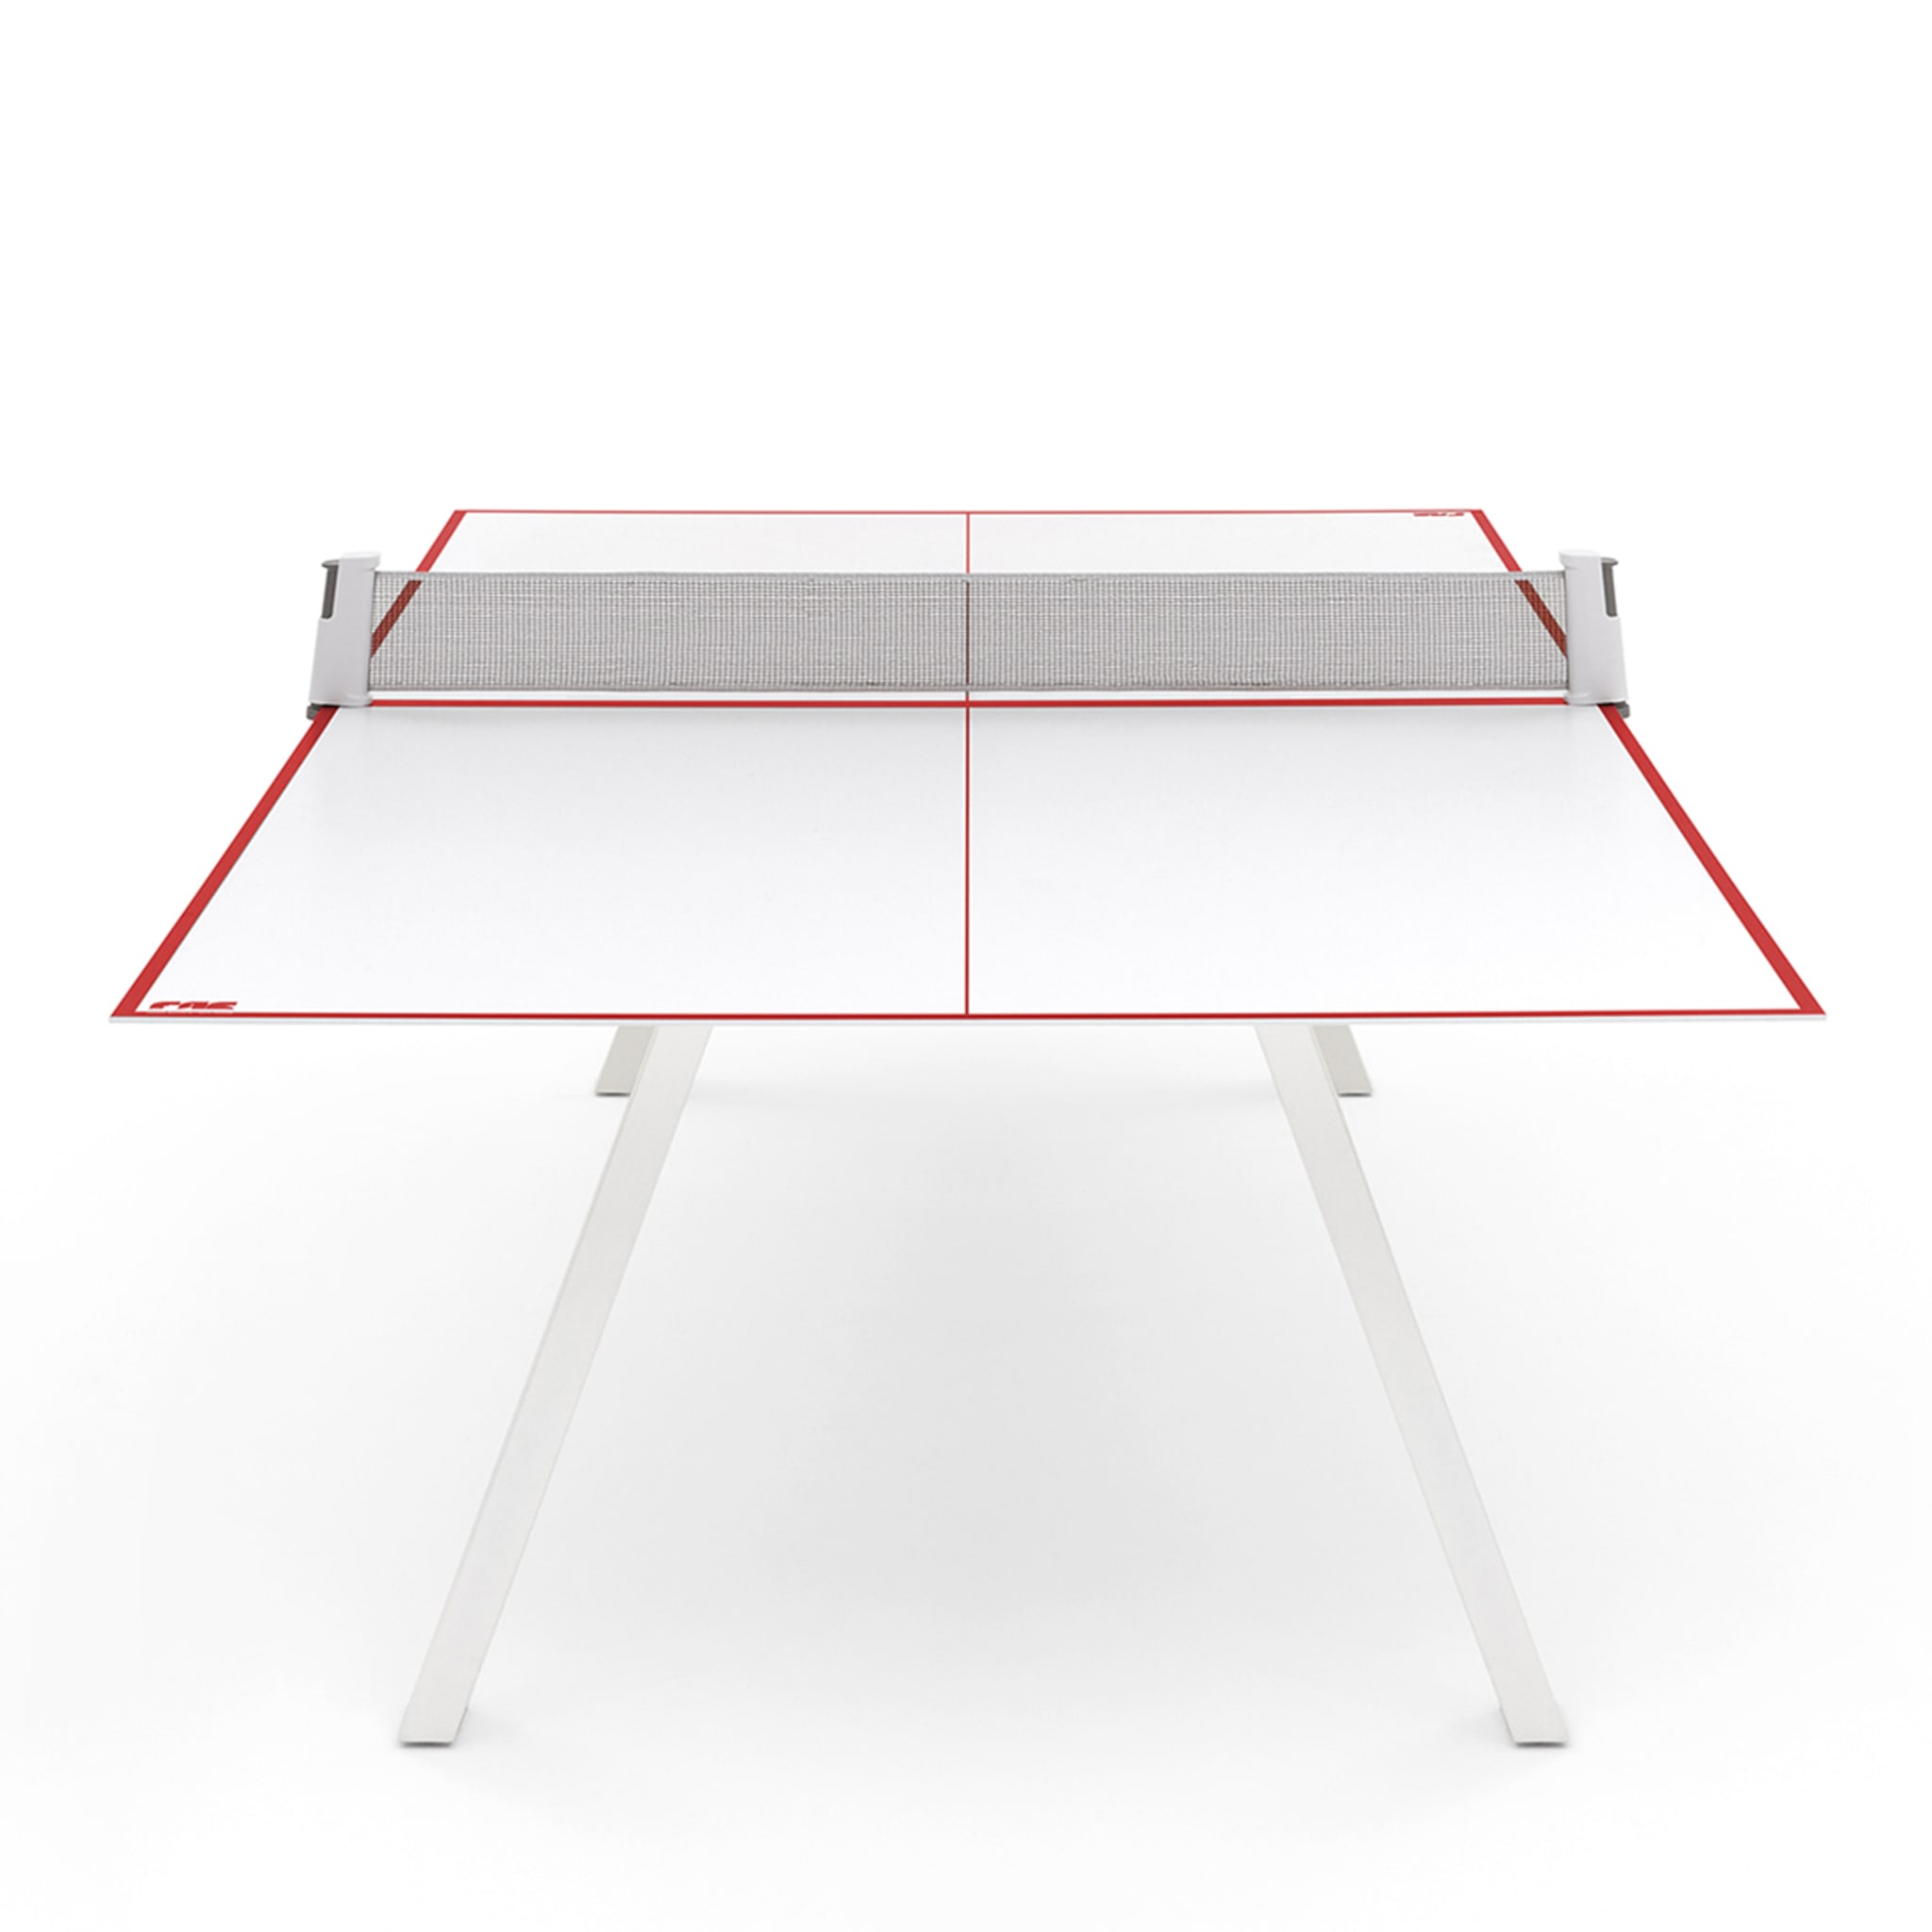 Grasshopper Outdoor White Ping Pong Table by Basaglia + Rota Nodari - Alternative view 2